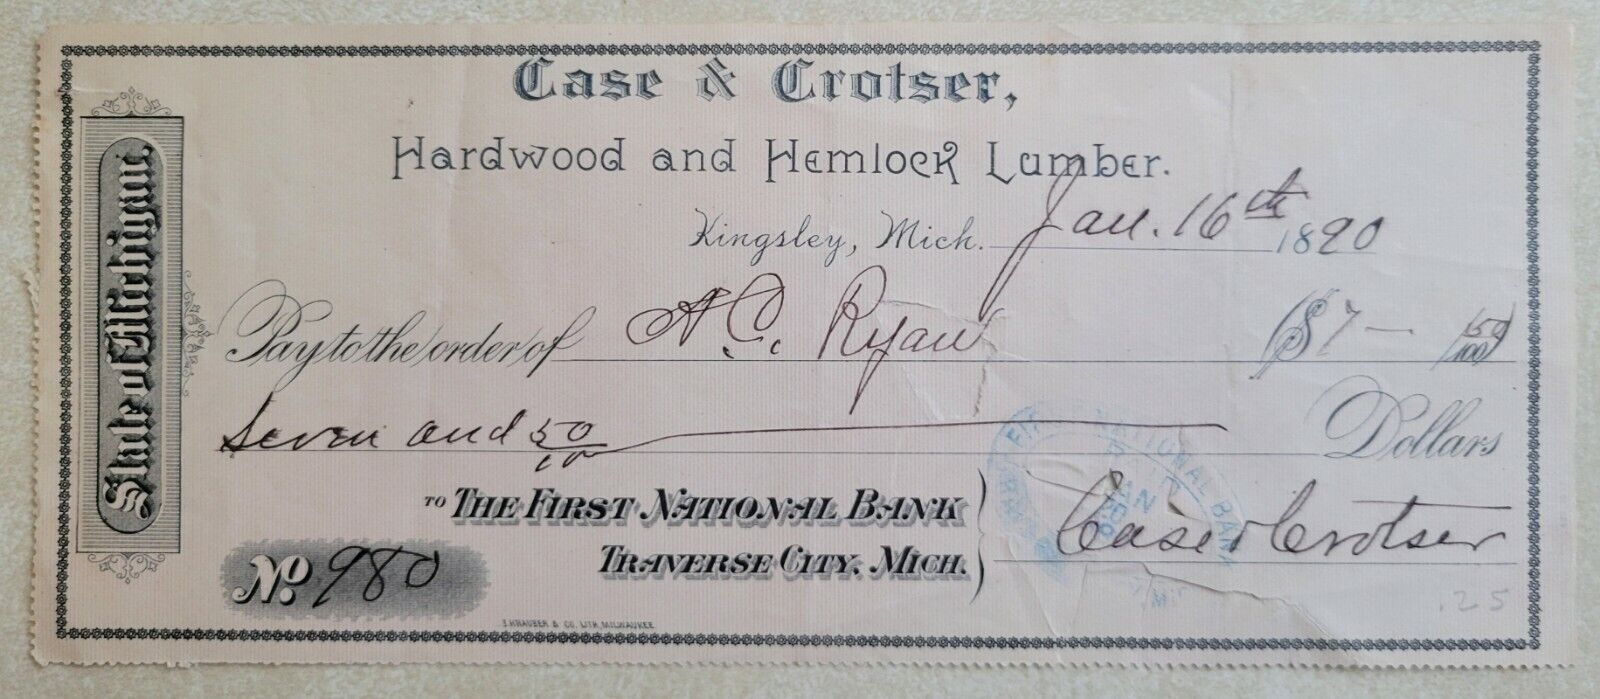 KINGSLEY MICHIGAN 1890 Case Croster Hardwood Hemlock Lumber Bank Check 